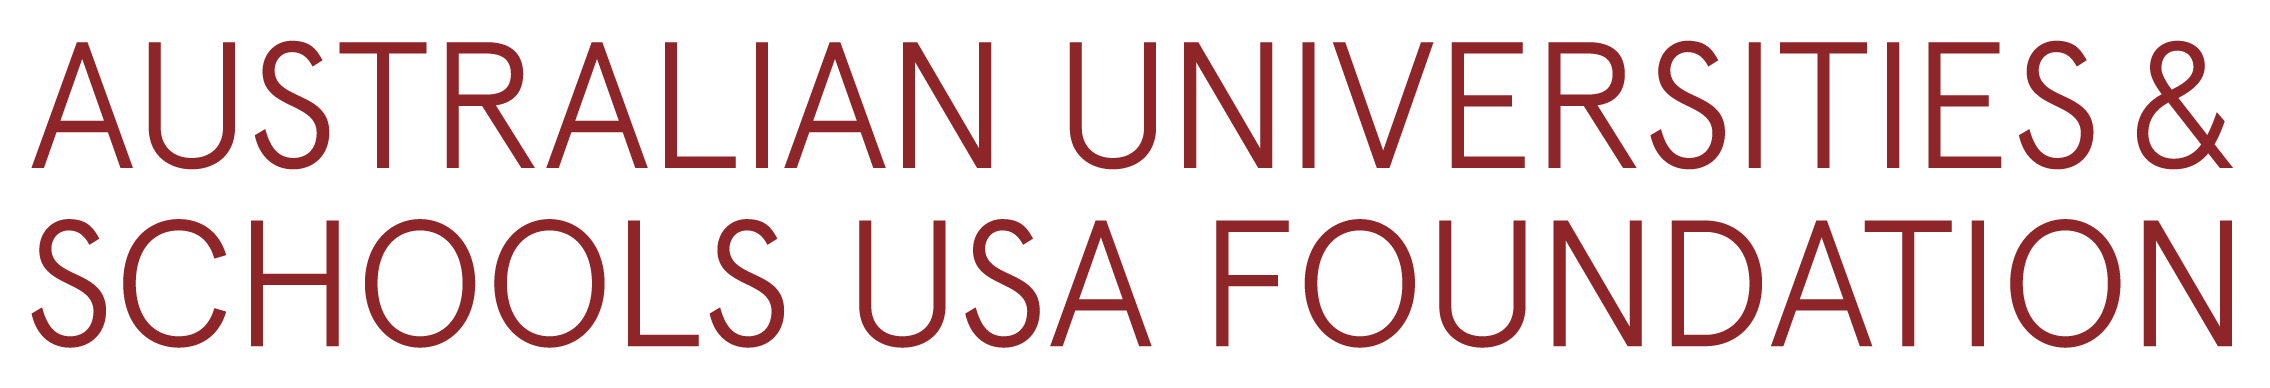 Australian Universities & Schools USA Foundation